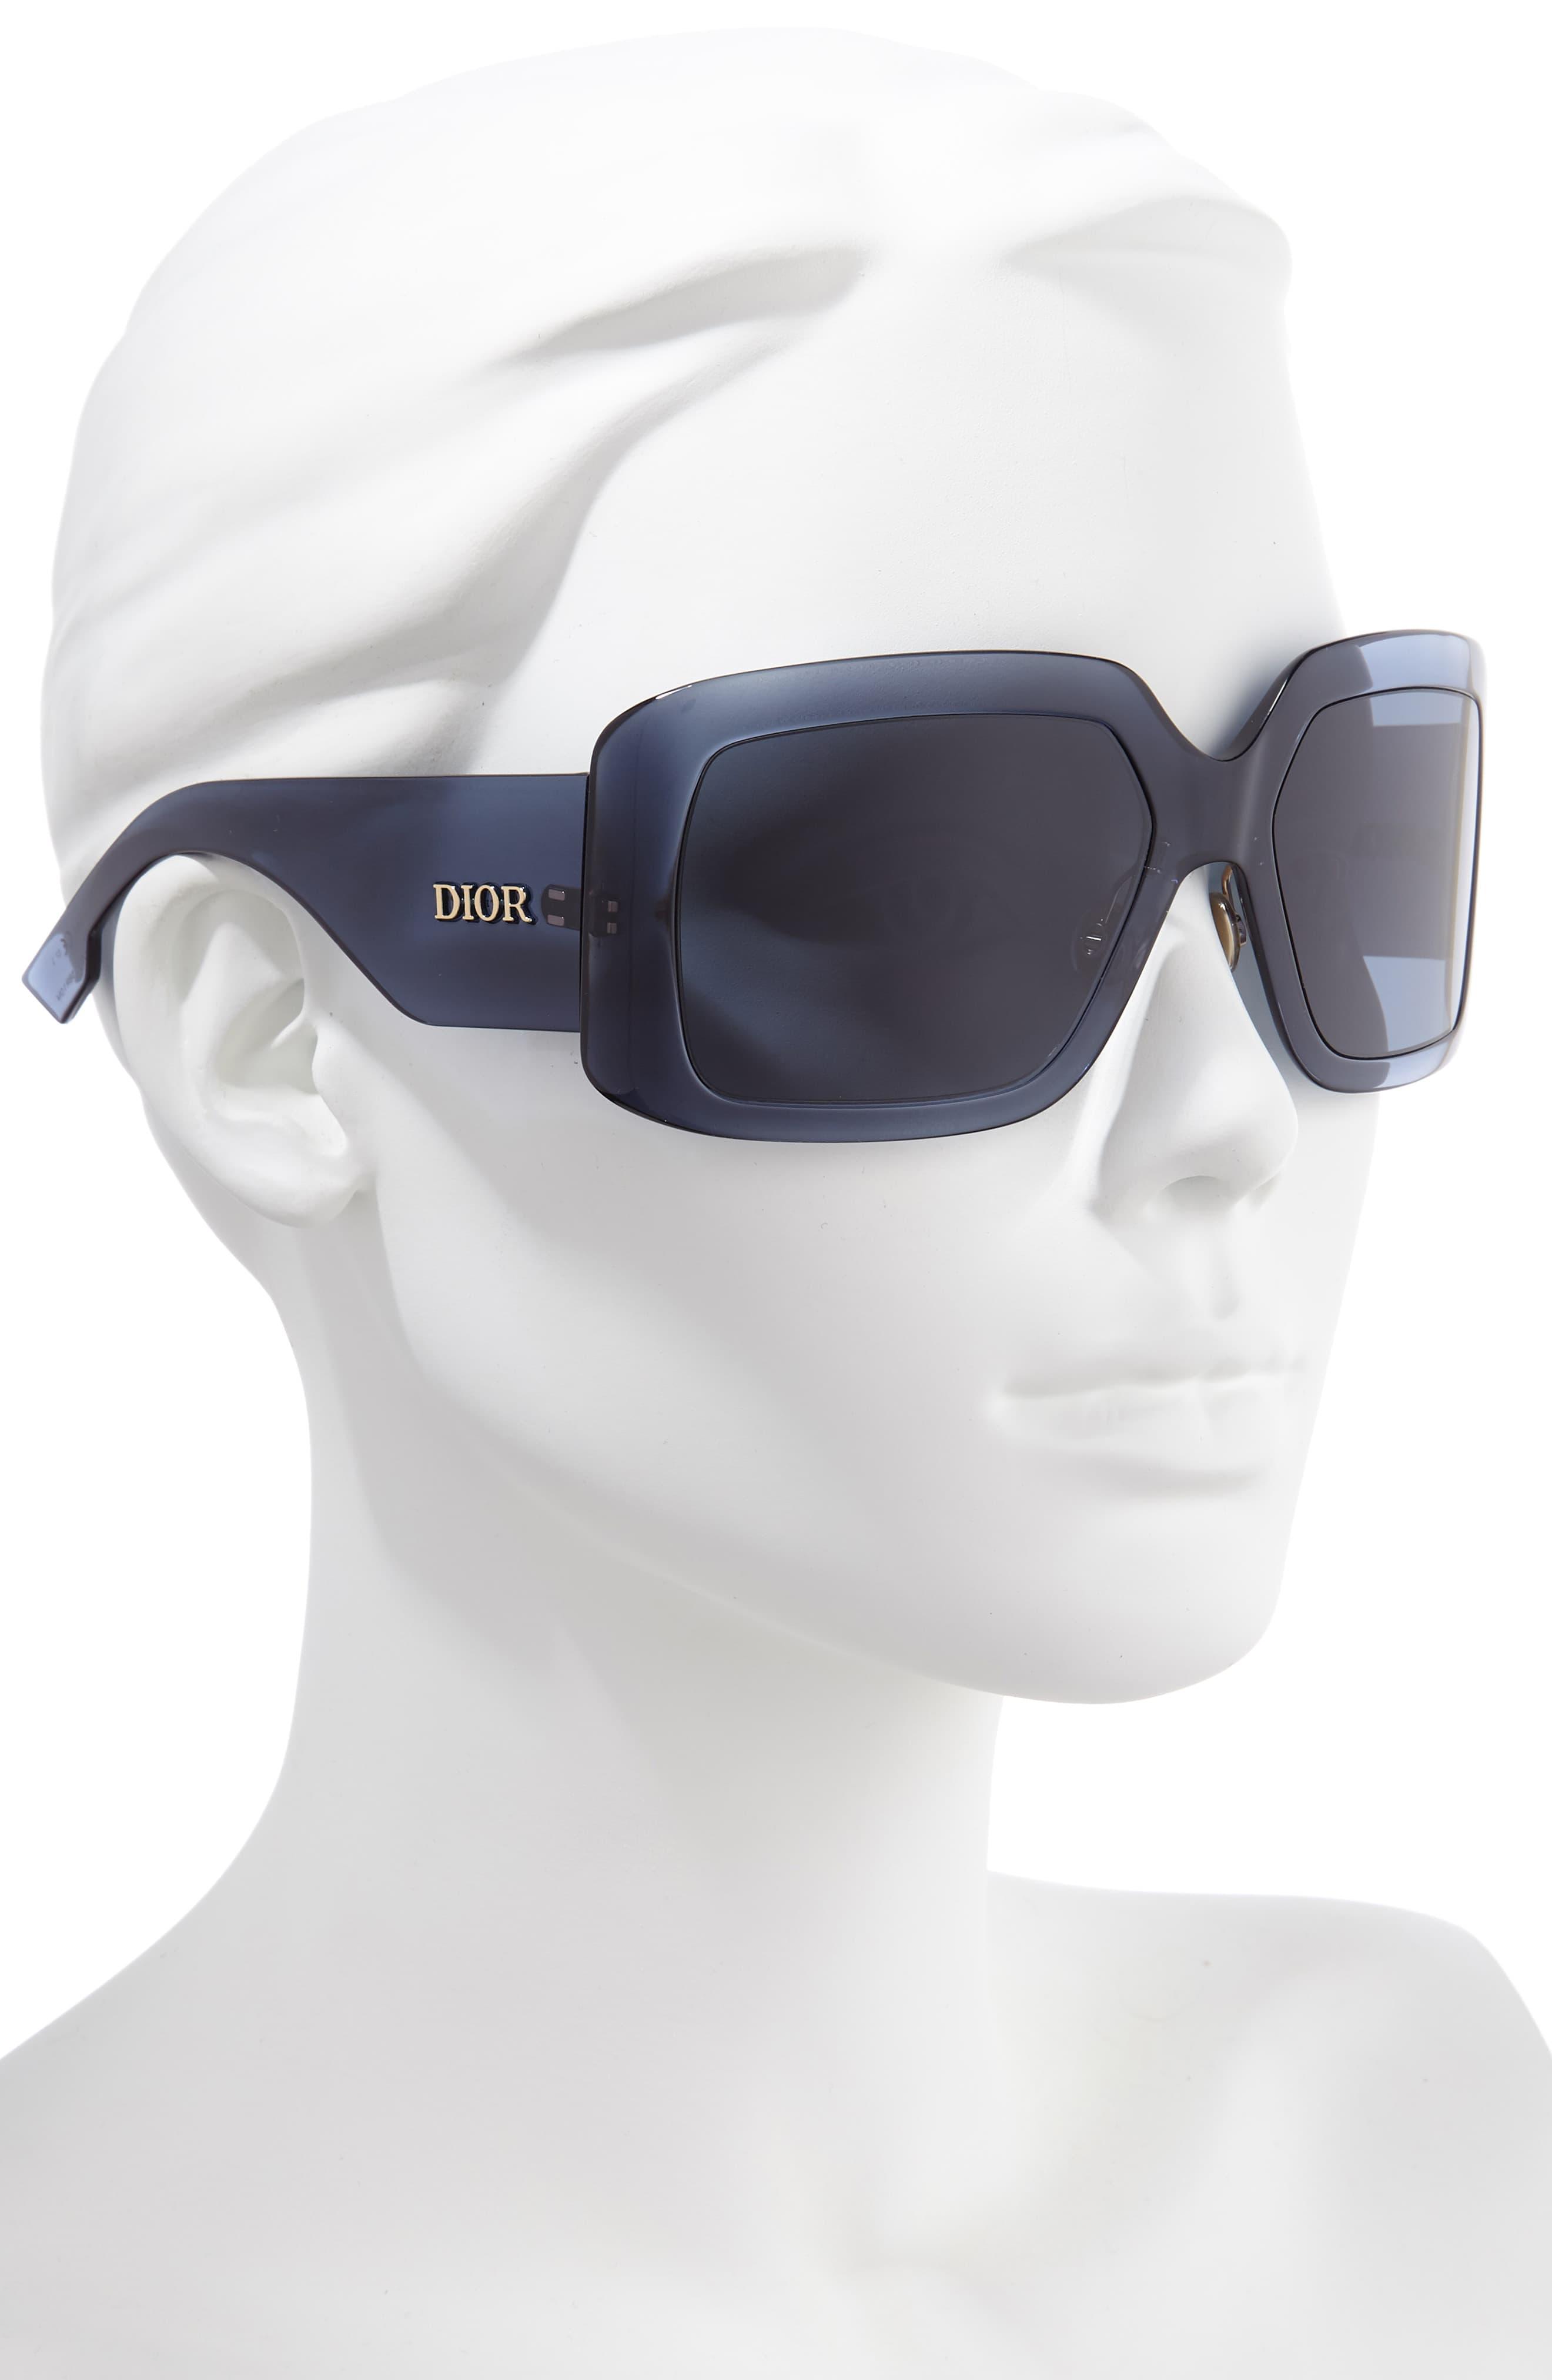 dior solight 2 sunglasses